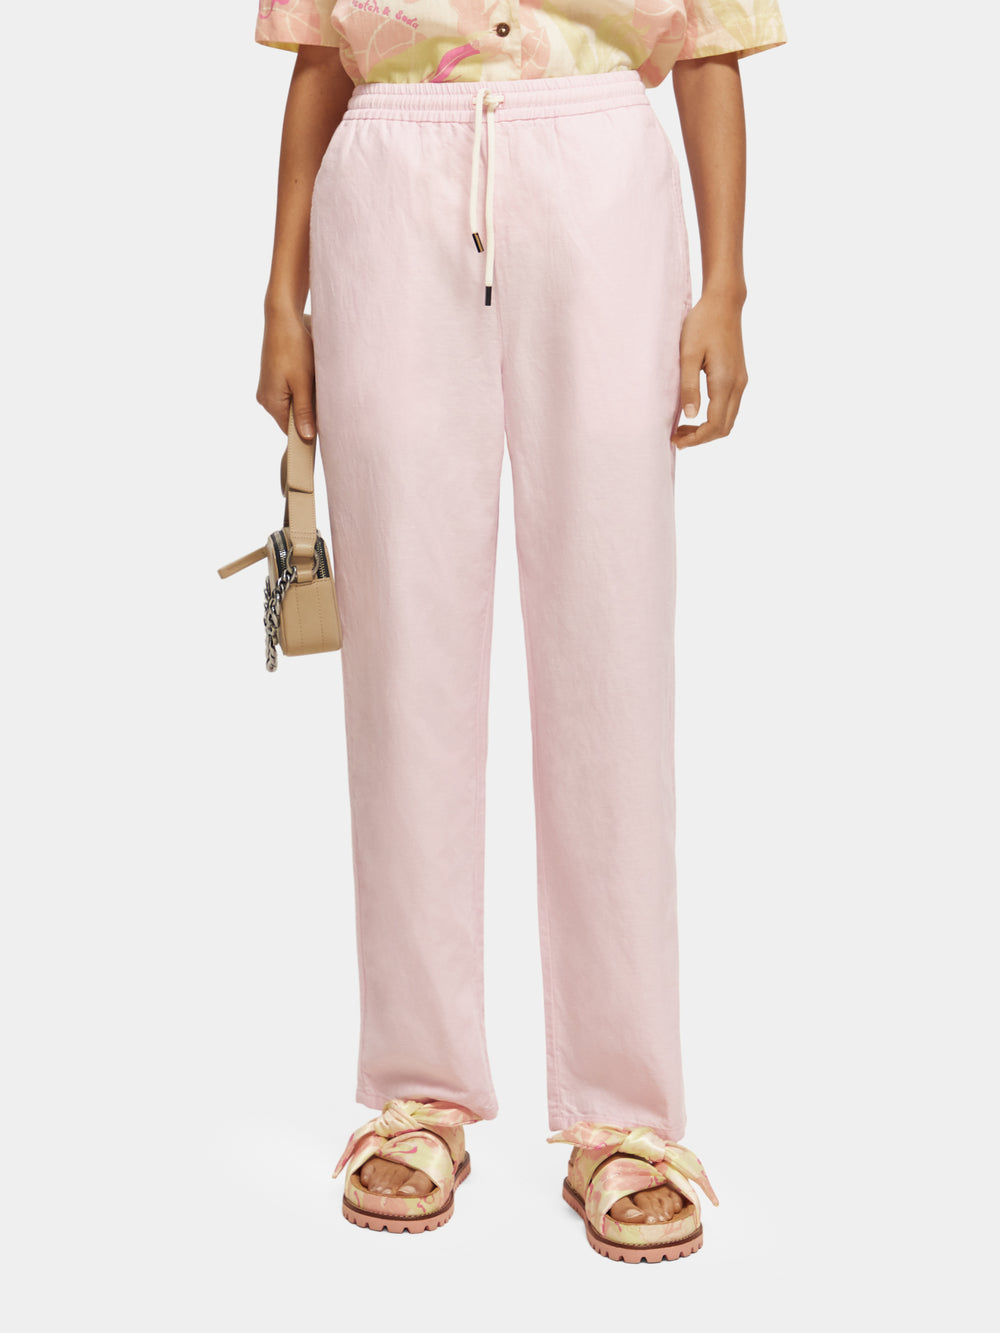 Aubrey high-rise linen blend pants - Scotch & Soda AU